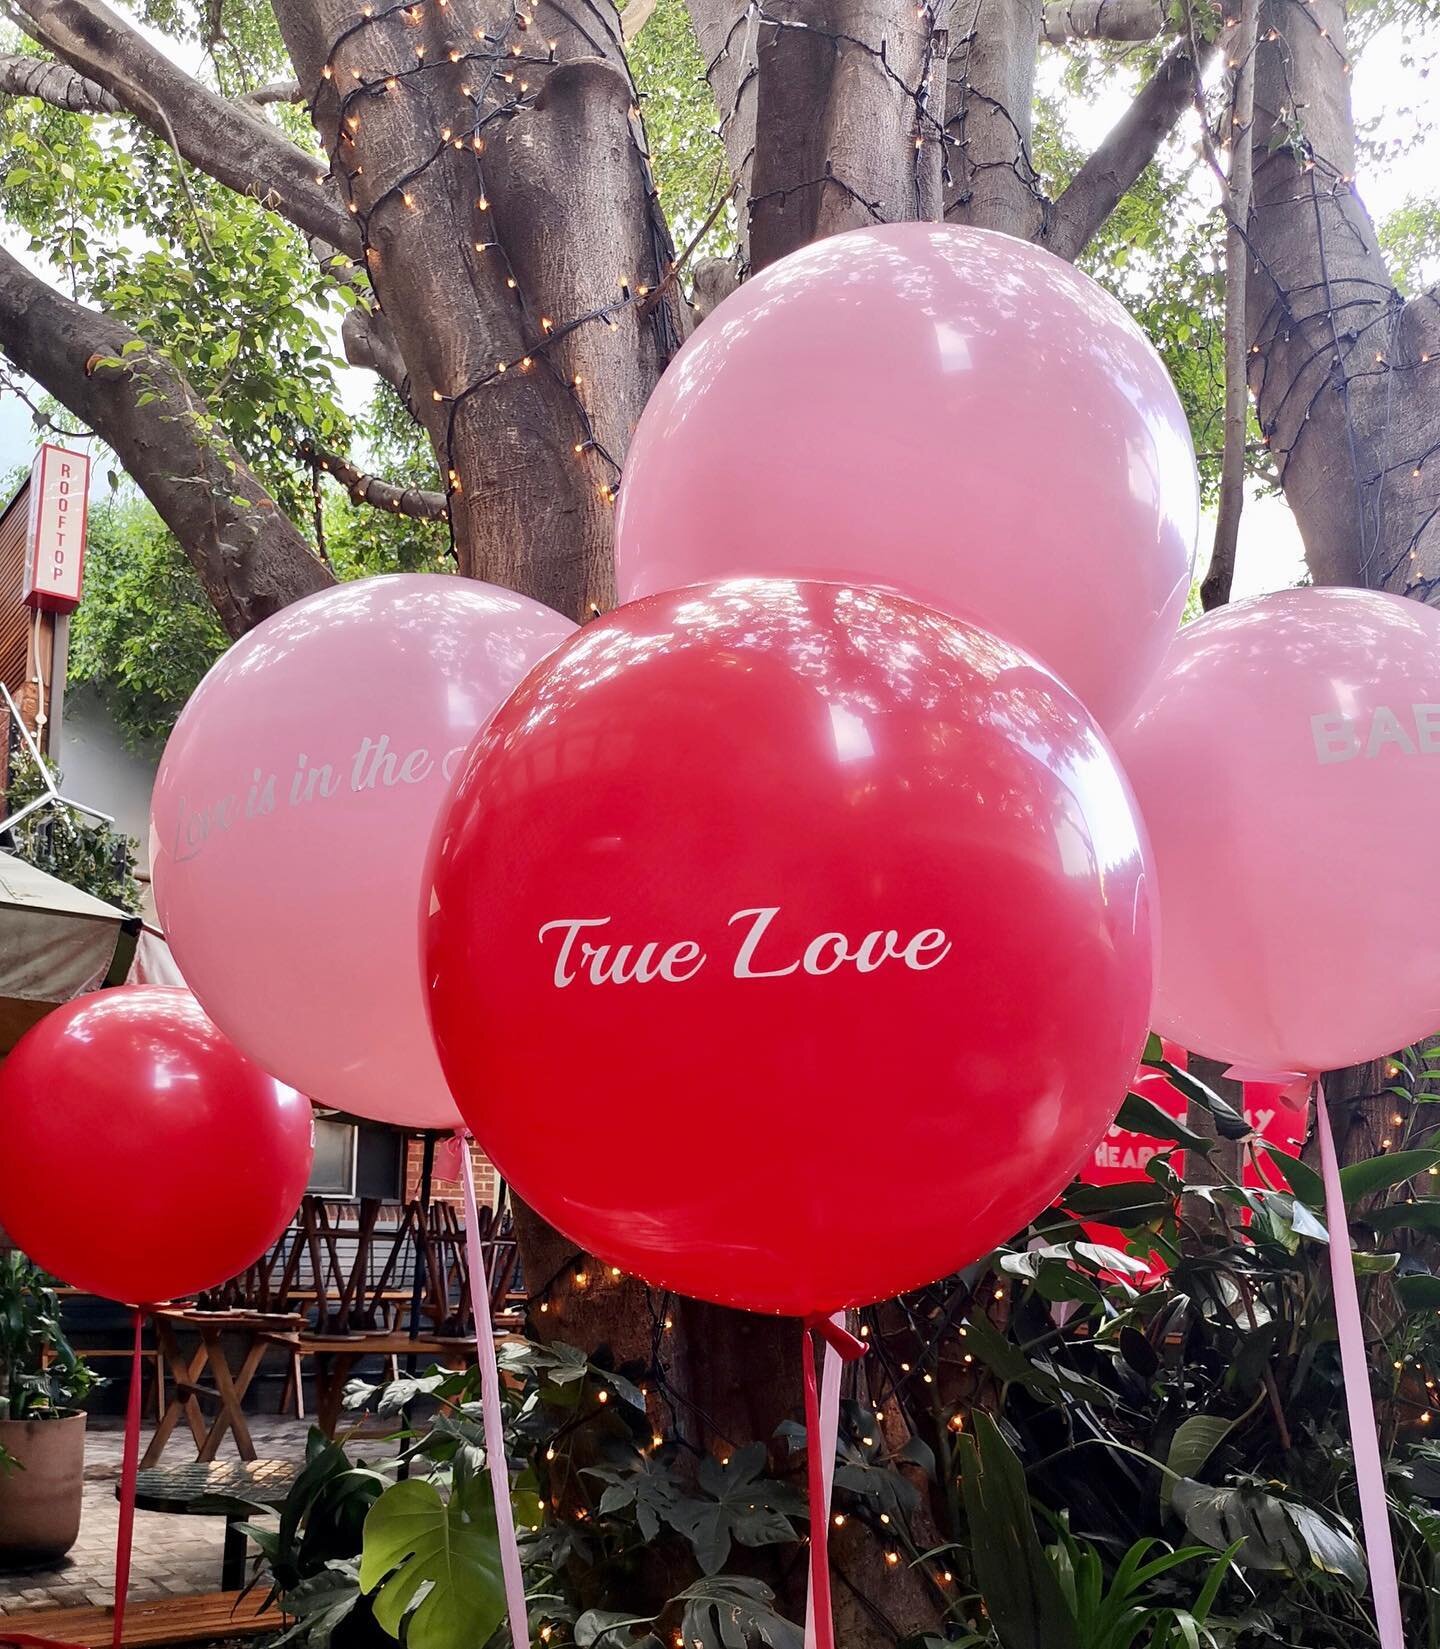 Be my #Valentine &hearts;️ #loveisintheair #valentinesday #bemyvalentine #houseofballoons_au 🎈 
*⁠⠀
*⁠⠀
*⁠⠀
*⁠⠀
*⁠⠀
*⁠⠀
#valentinesballoons #sydneyballoons #valentinedecor #visitpaddington #loveislove #galentinesday #sydneyballoondecorator #sydneypa